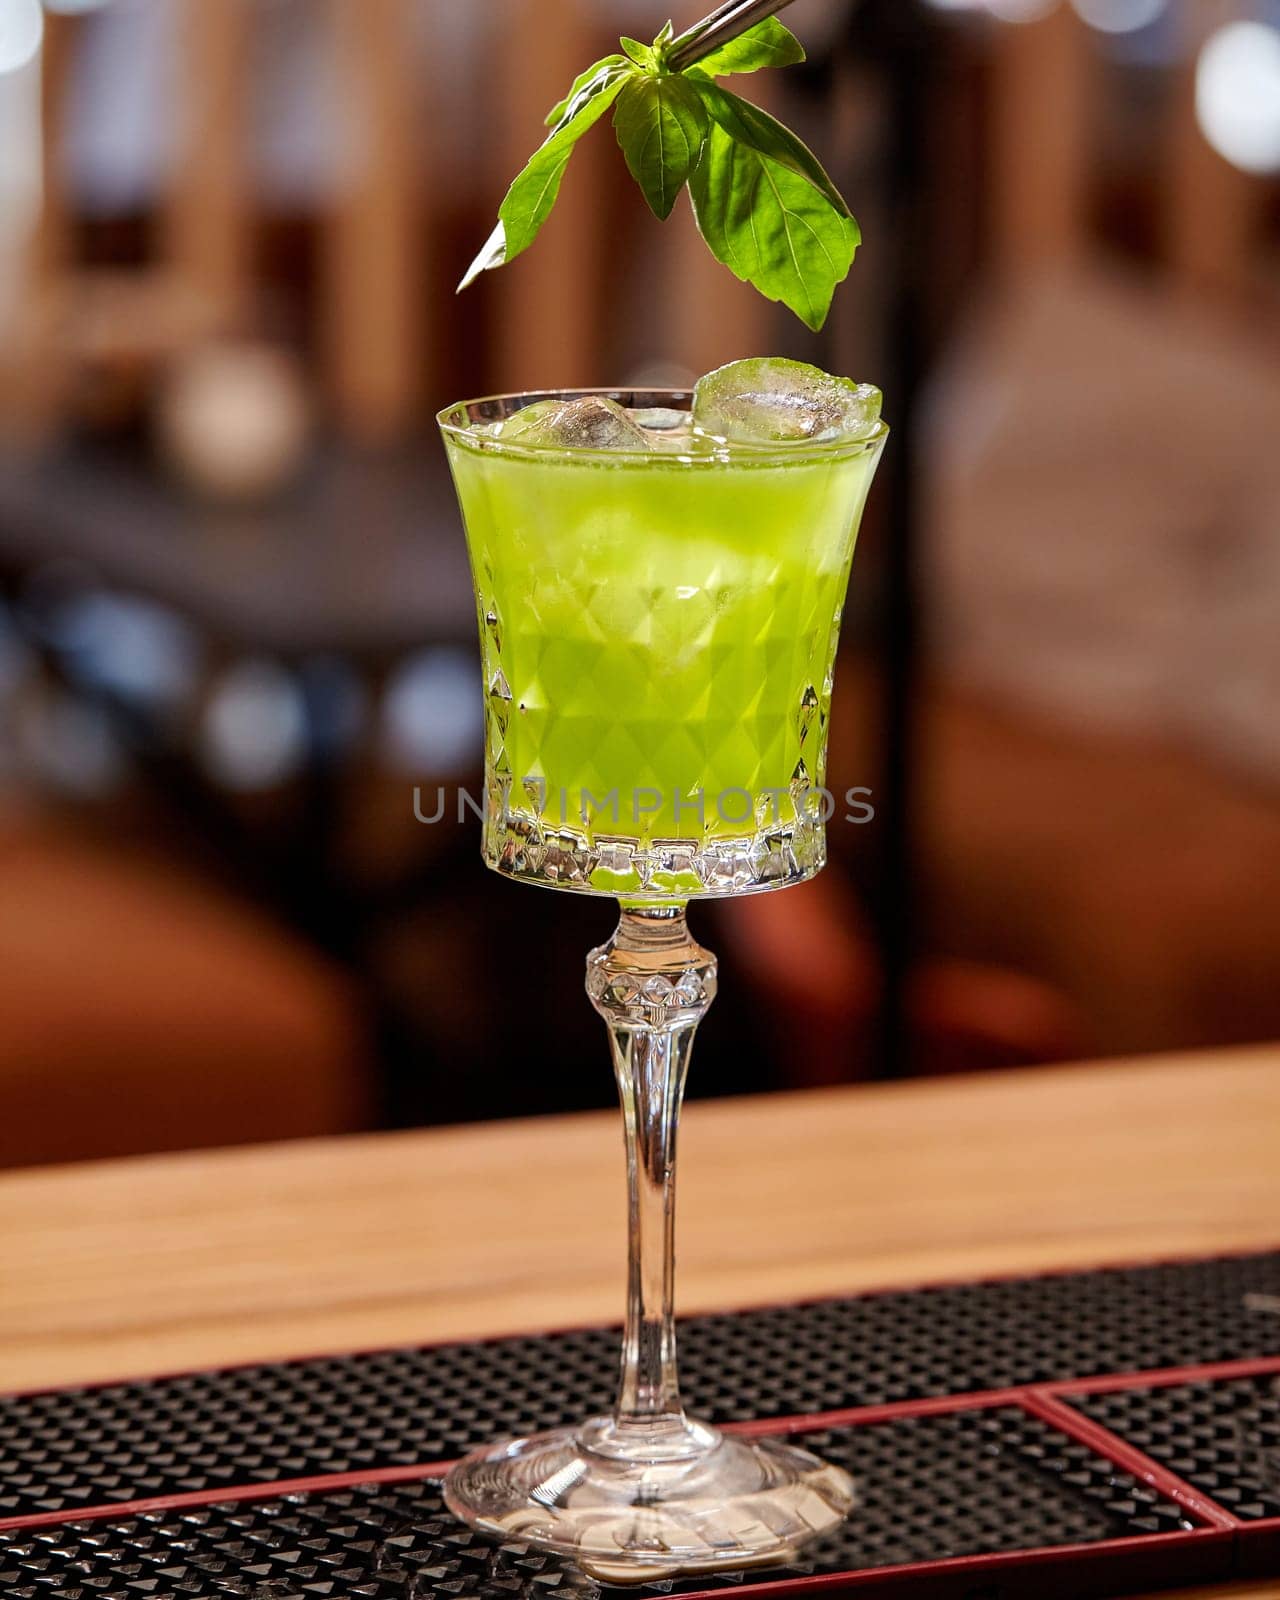 Elegantly presented glass of gin based Basil Smash cocktail with vibrant green color and fresh basil leaf garnish, served chilled on bar mat